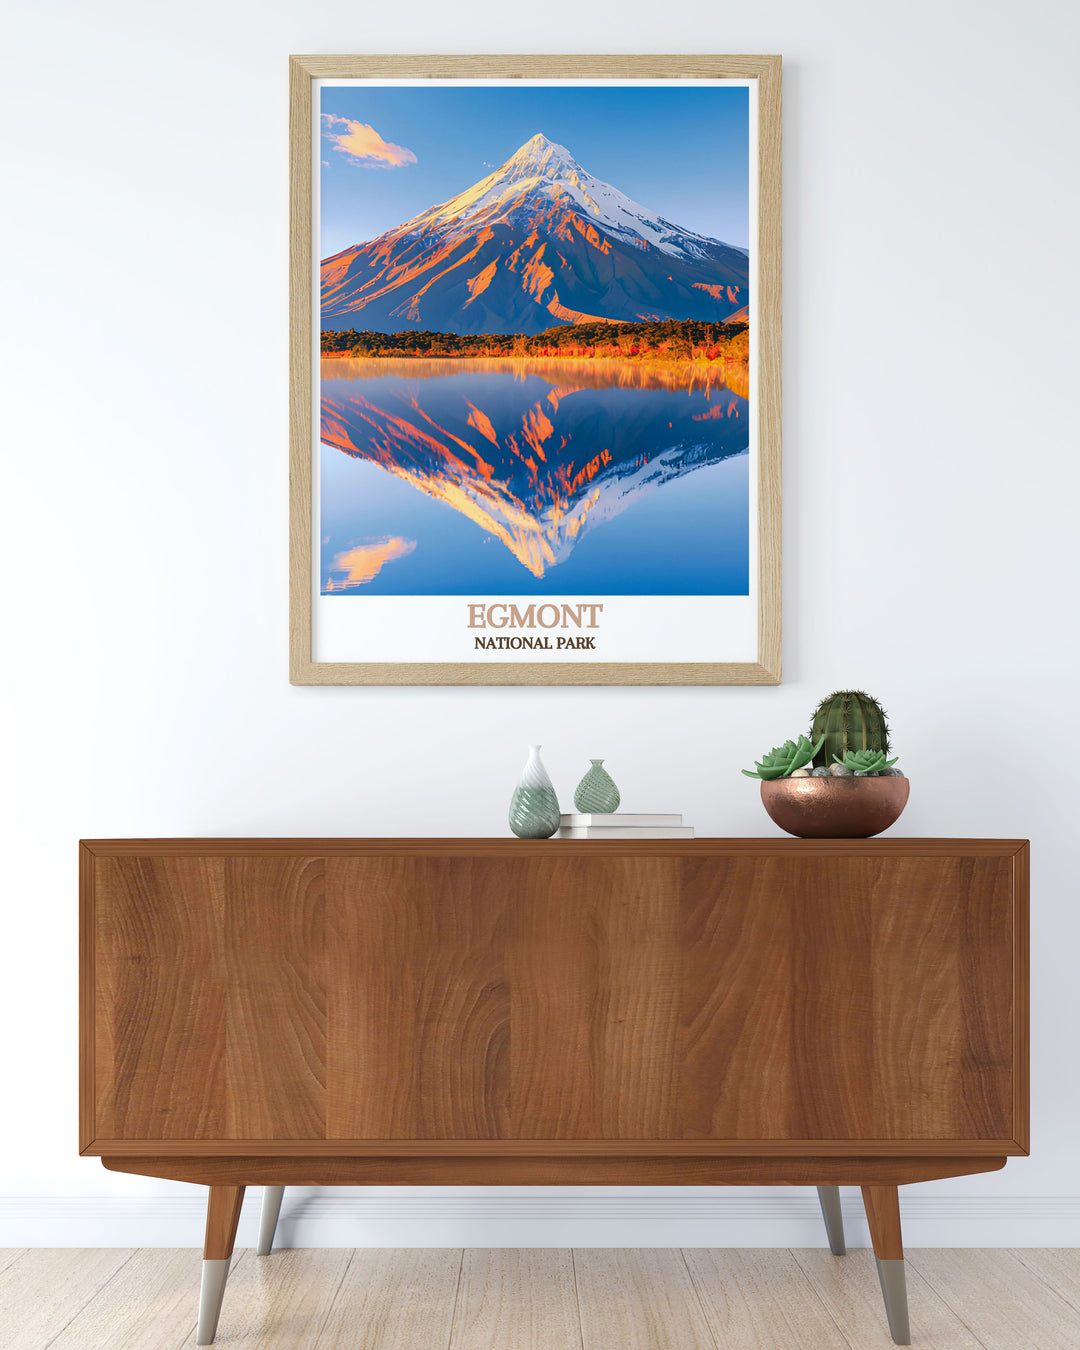 Illustration of Egmont National Park, emphasizing the lush forests and majestic Mount Taranaki, ideal for nature enthusiasts.